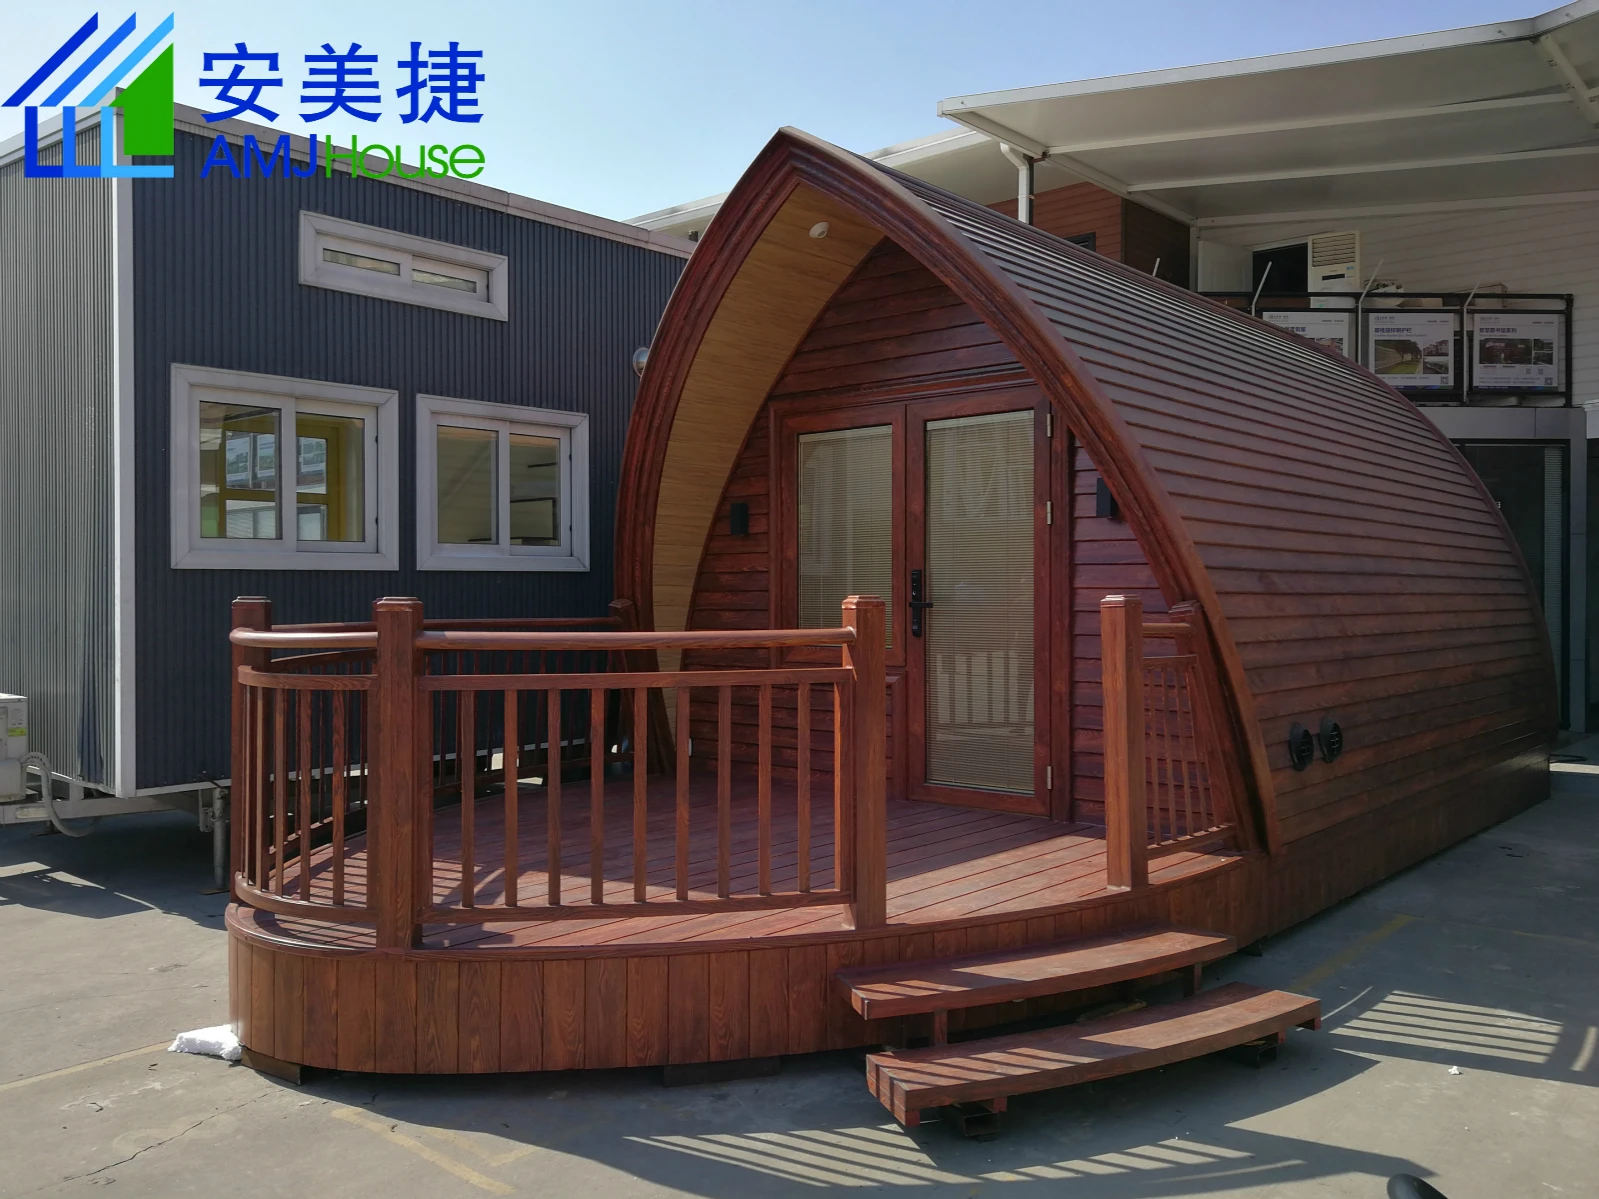 Eco-friendly 2 bedroom modern prefab house home prefabricated, View